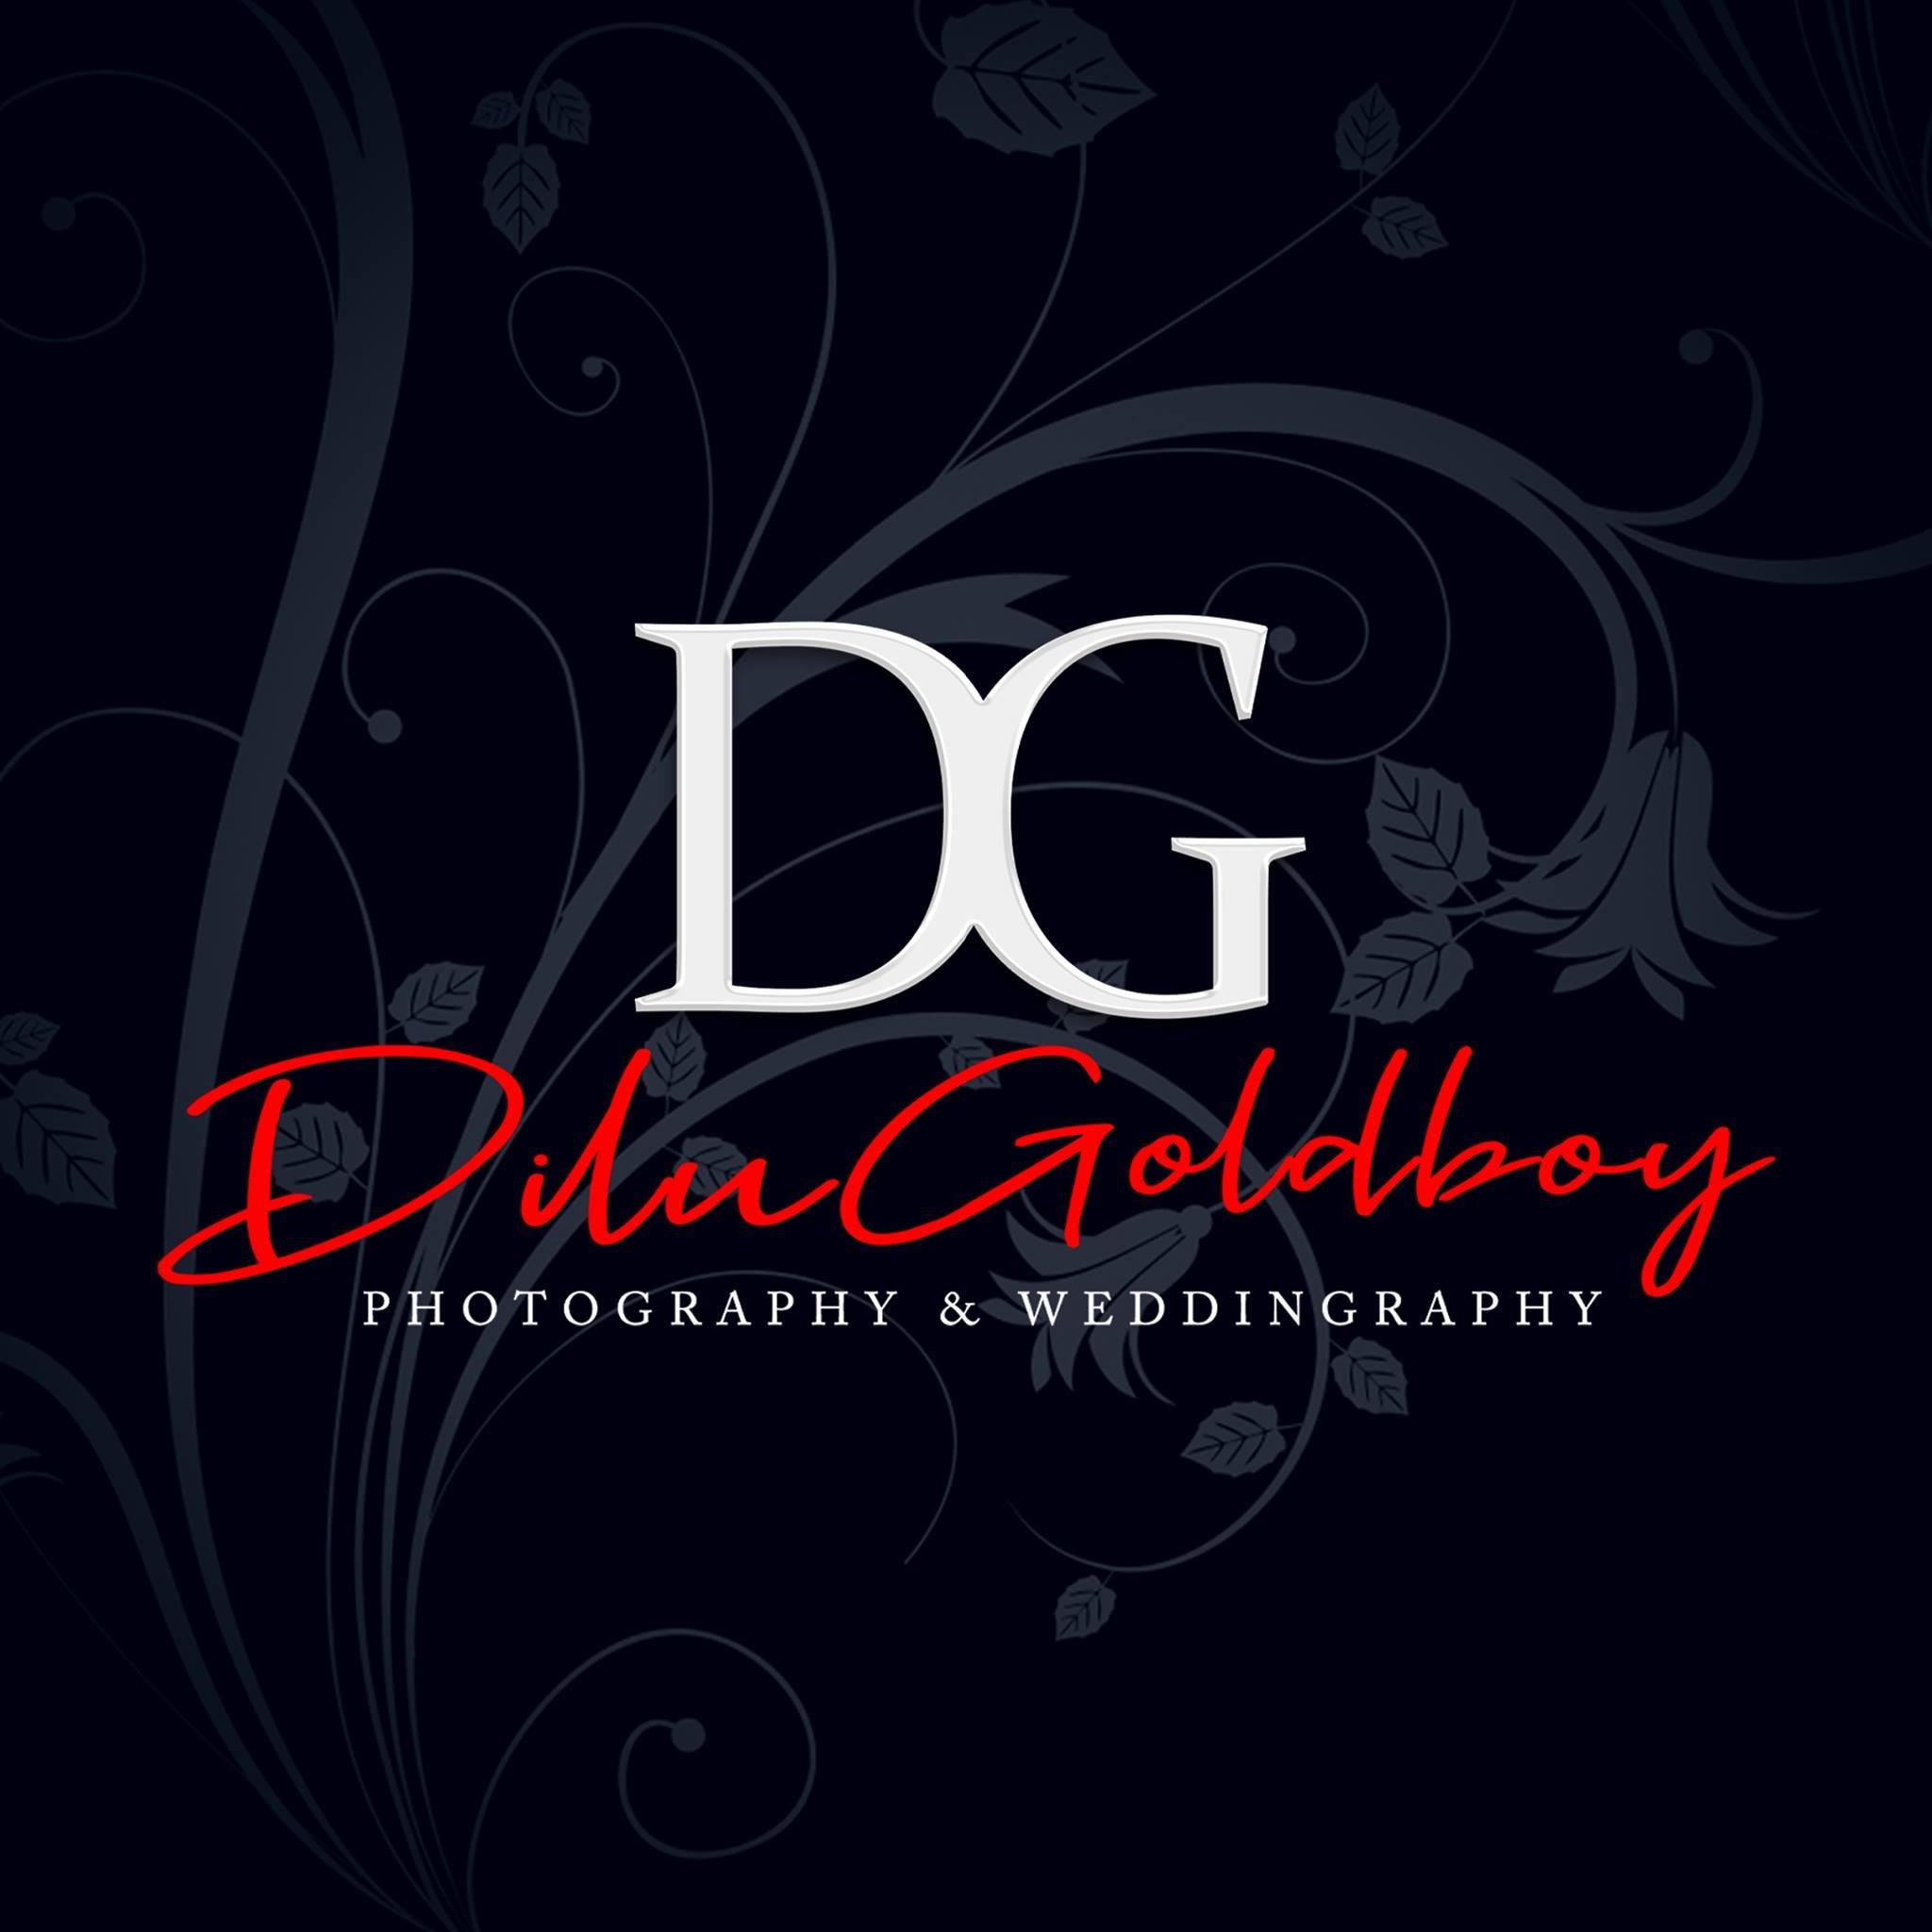 DG Photography & Weddingraphy|Photographer|Event Services